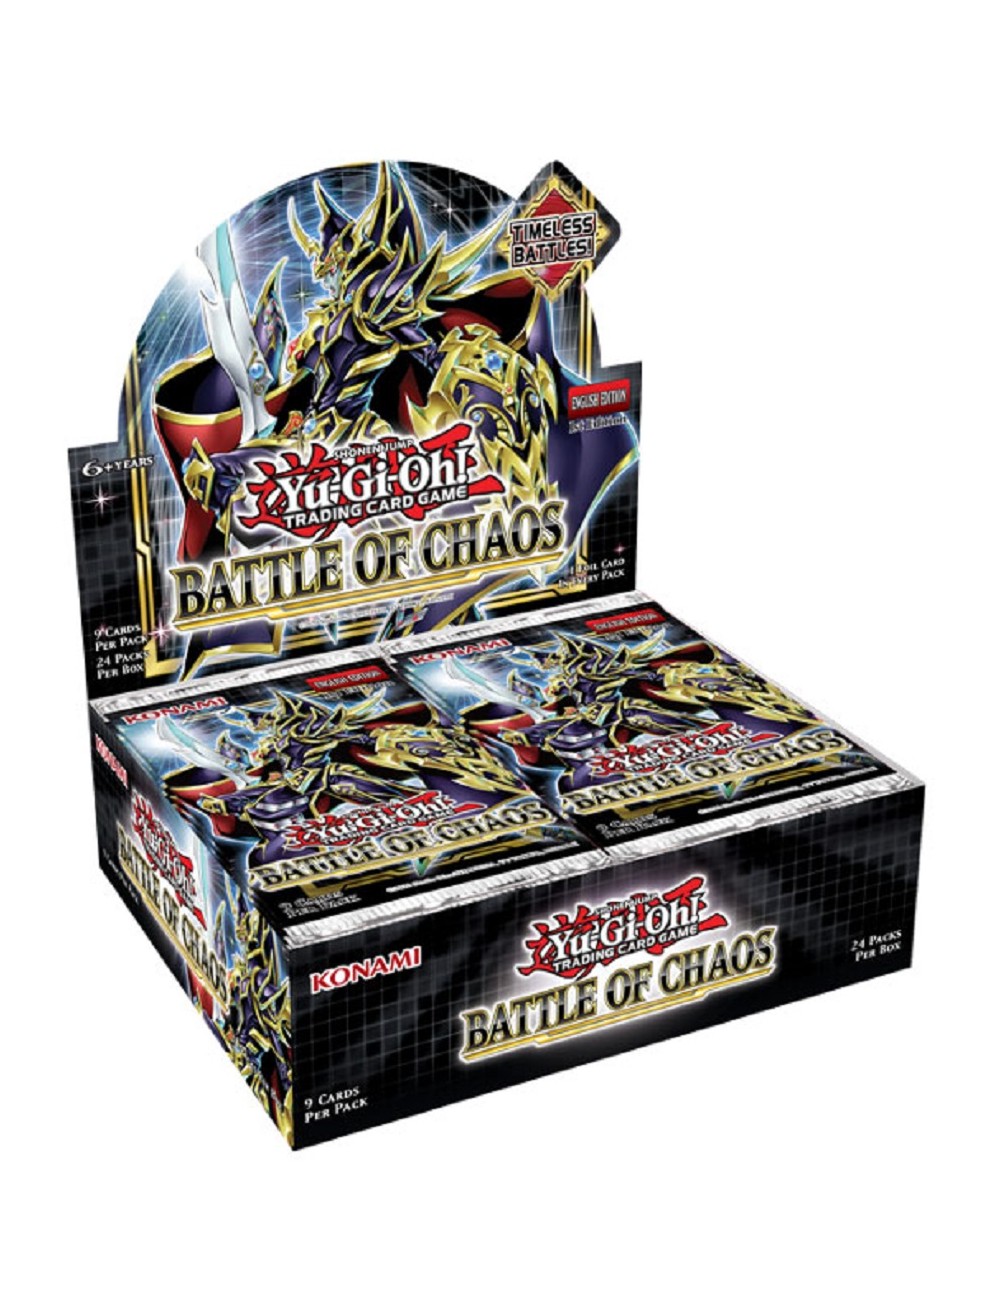 Battle of Chaos - Caja YGI_717853002  Konami